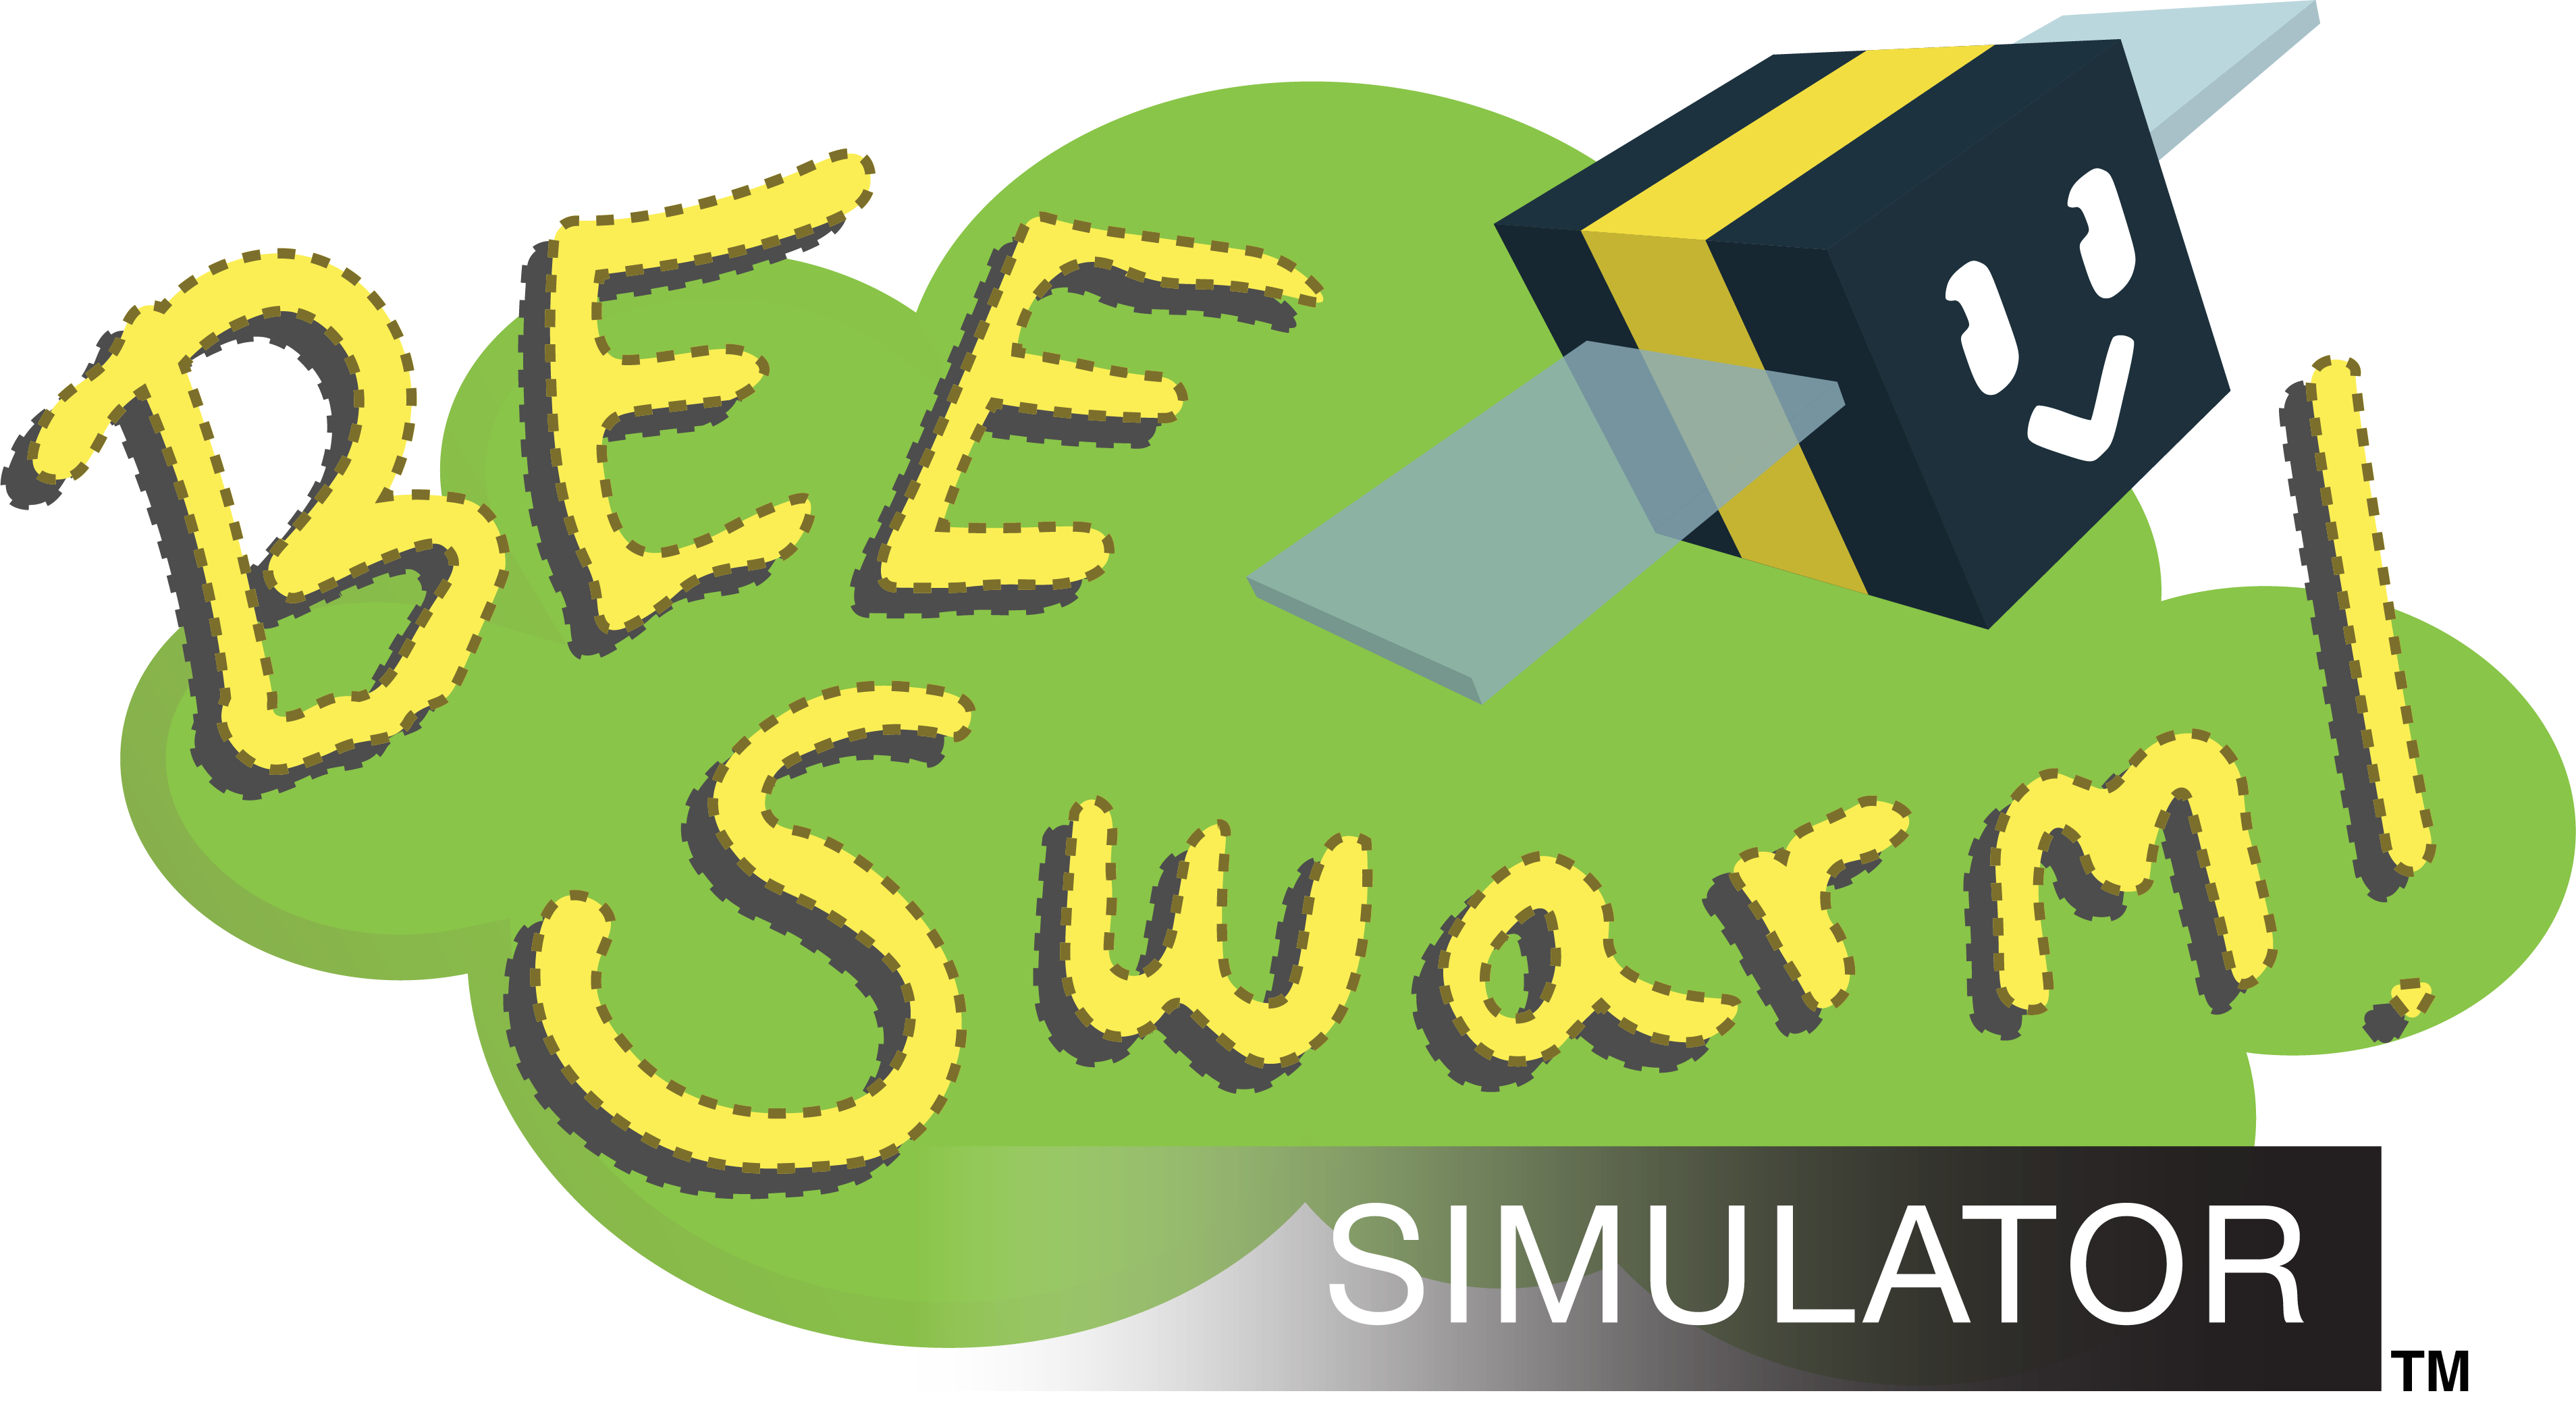  Bee Swarm Simulator – Brown Bear Action Figure Pack w